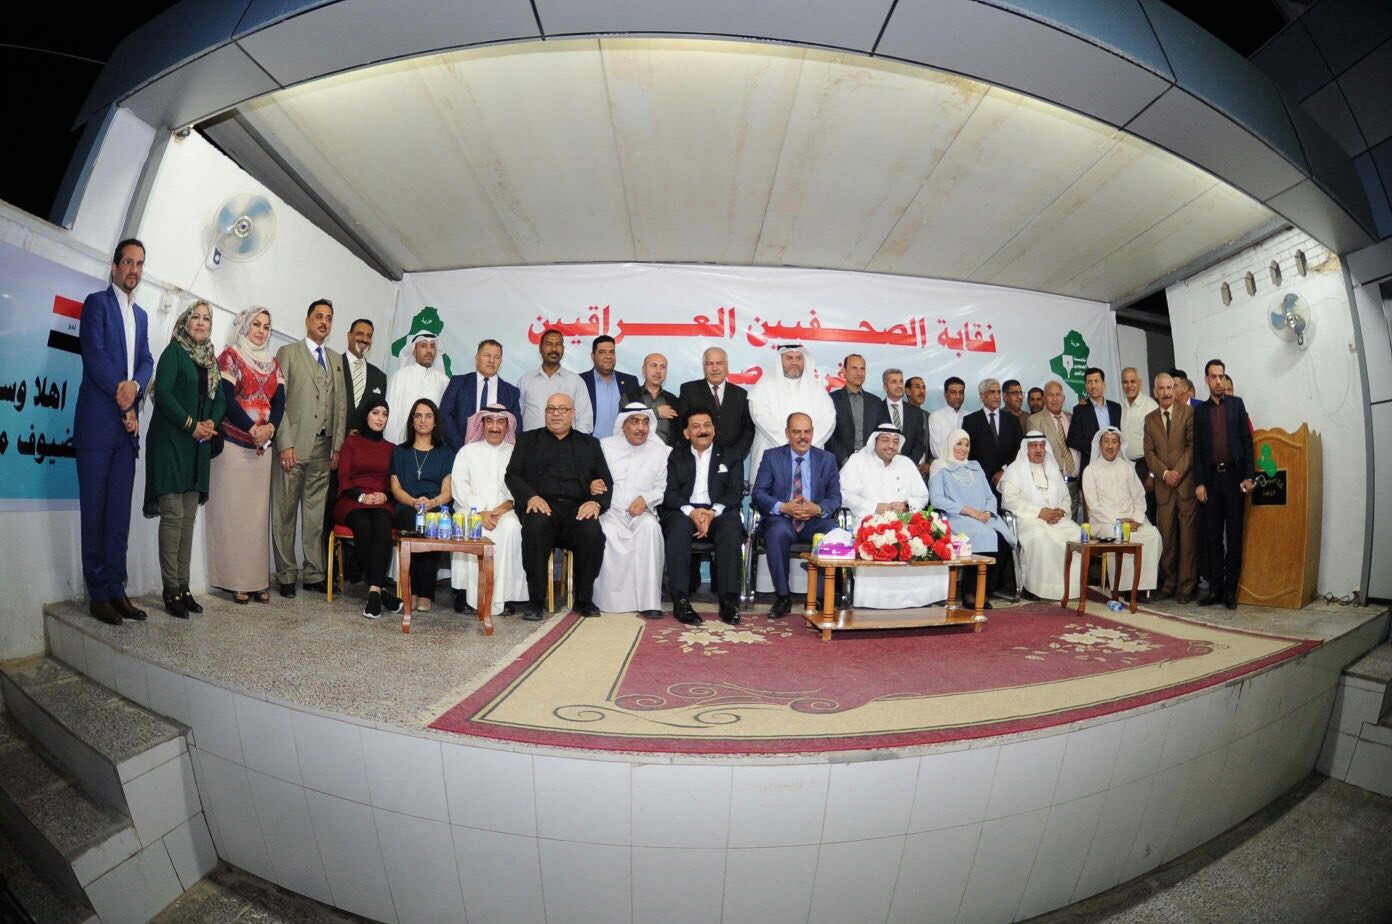 A group photo of the Kuwaiti-Iraqi media figures